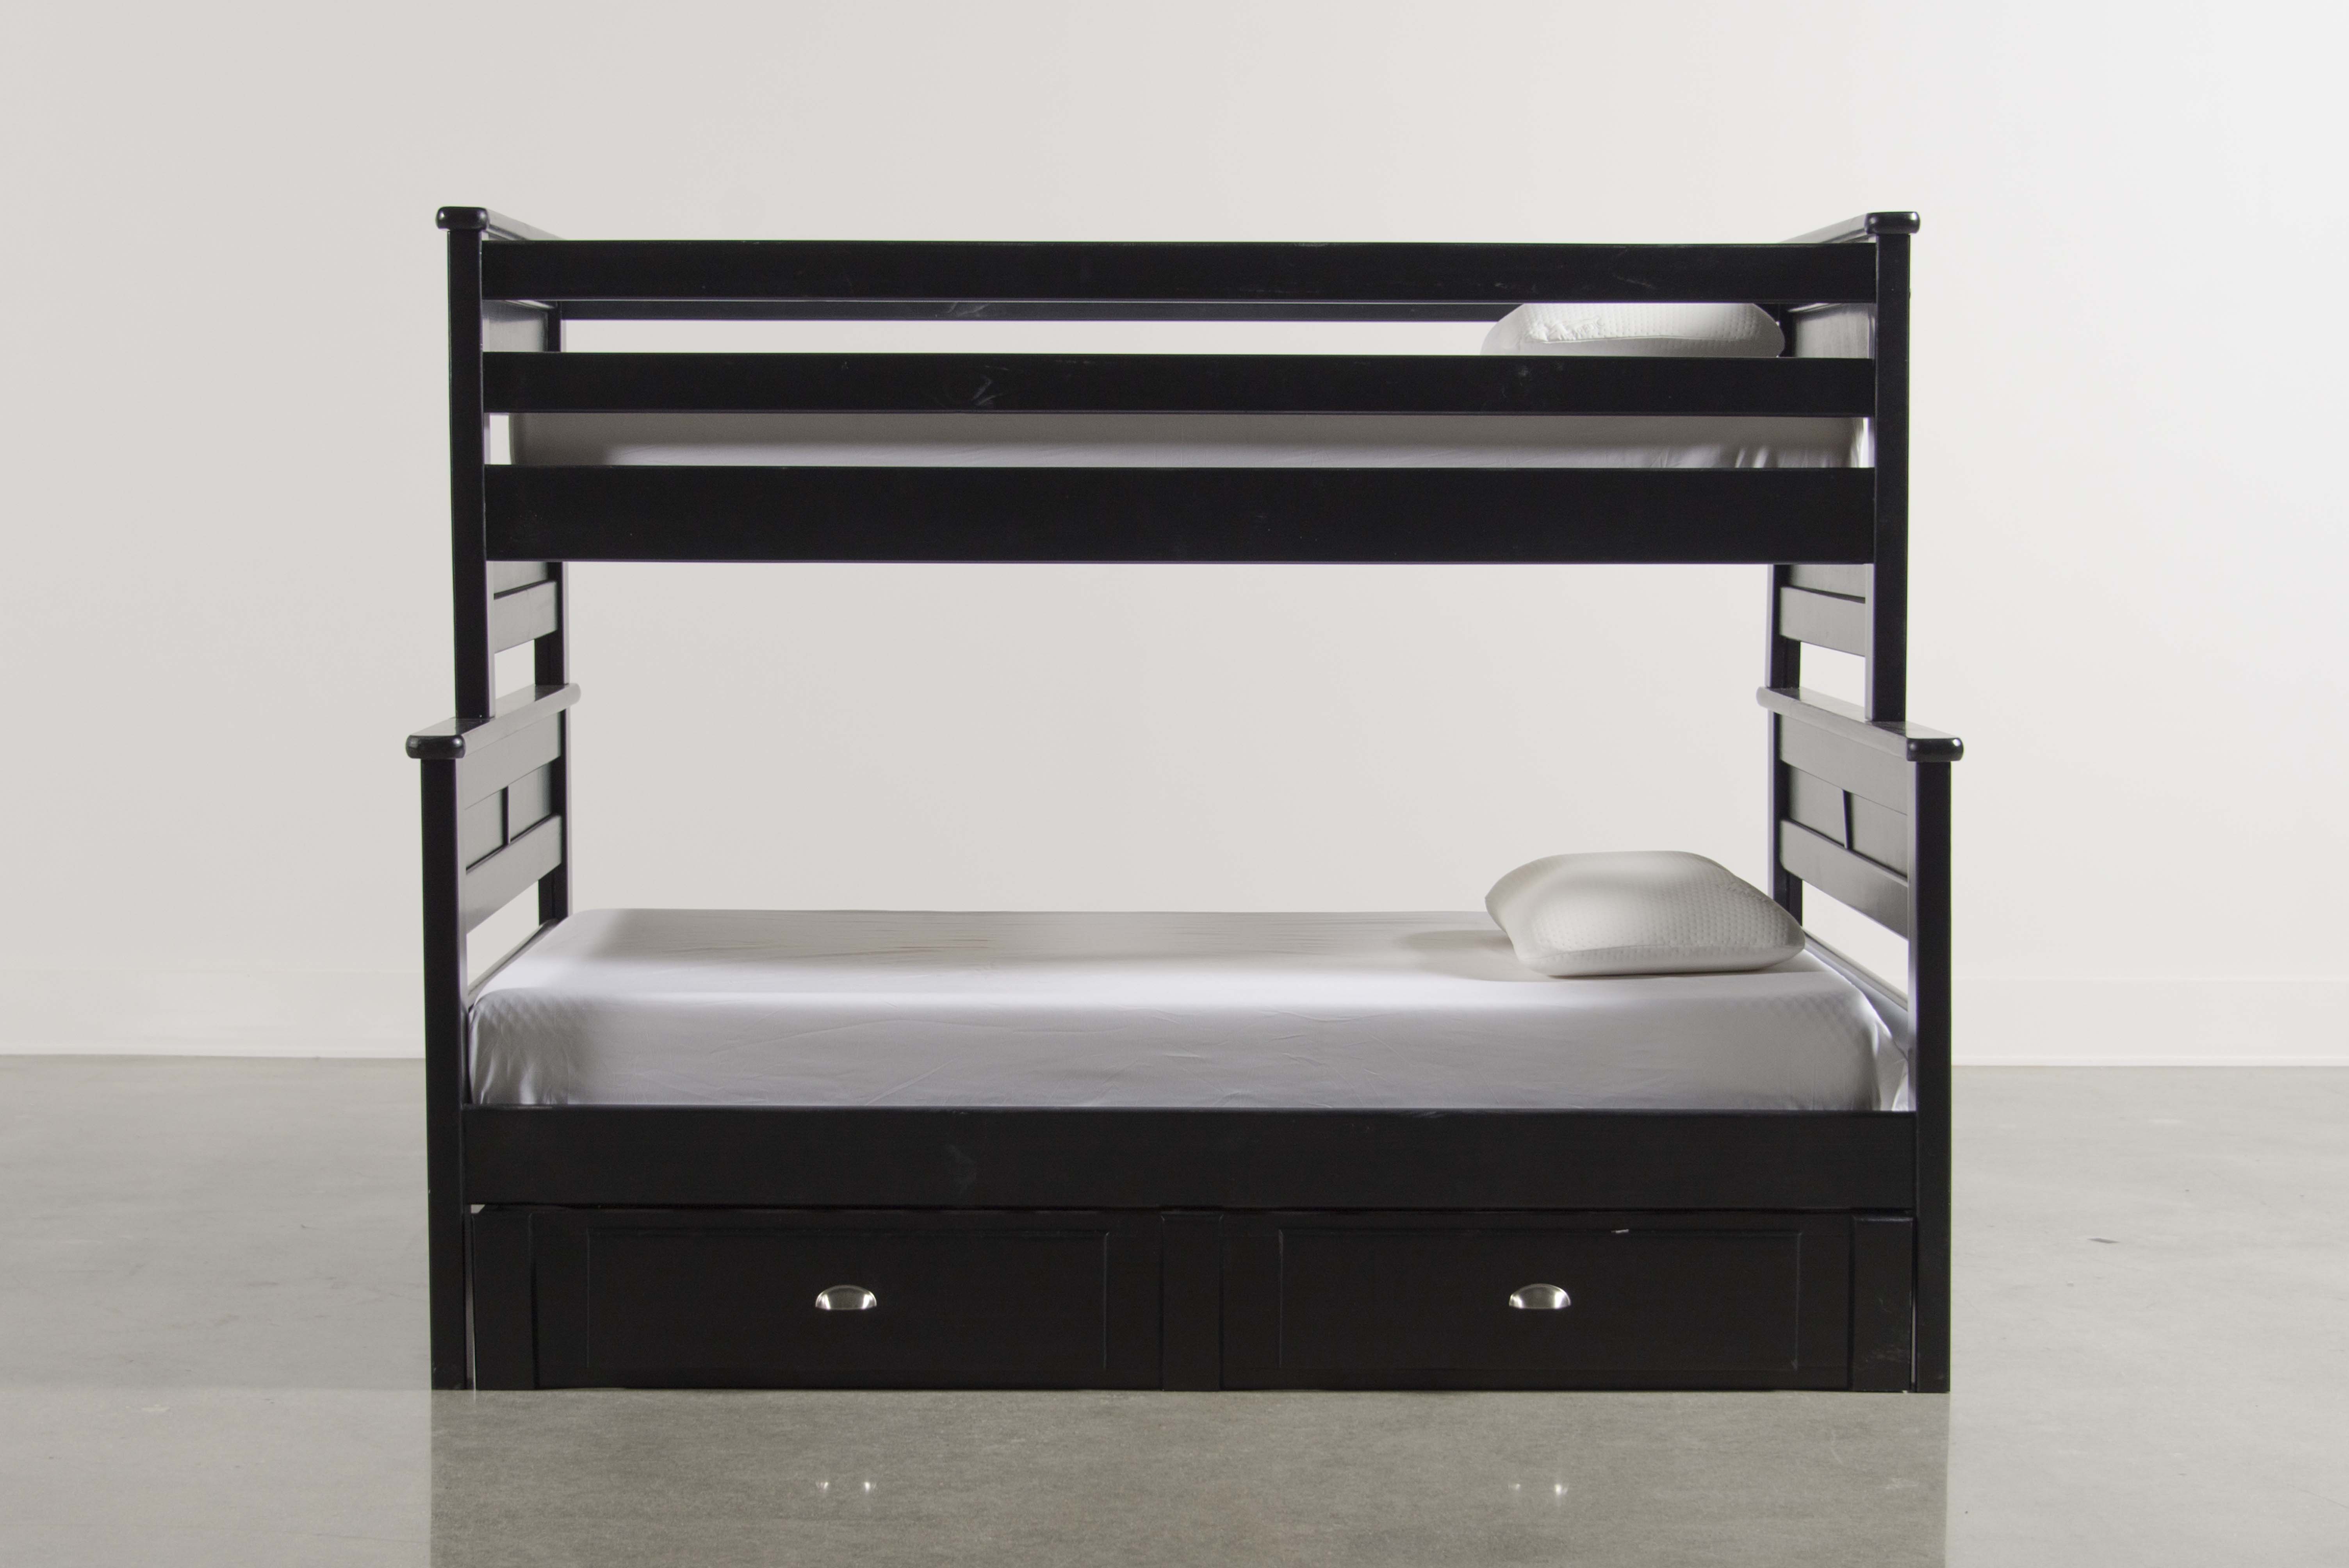 twin loft bed black